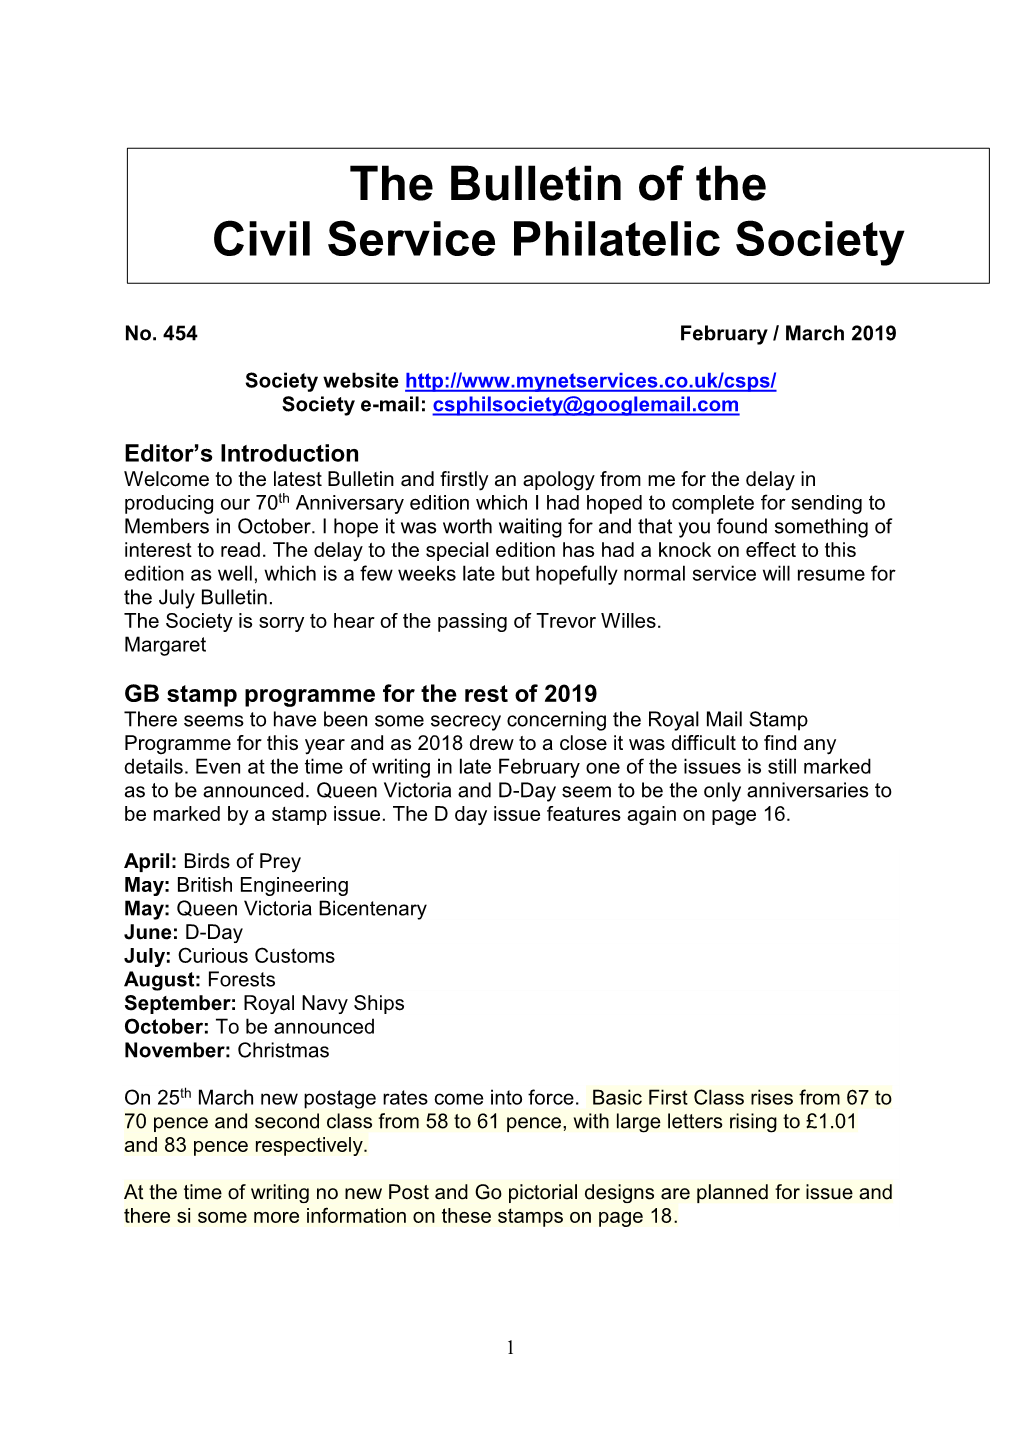 The Bulletin of the Civil Service Philatelic Society